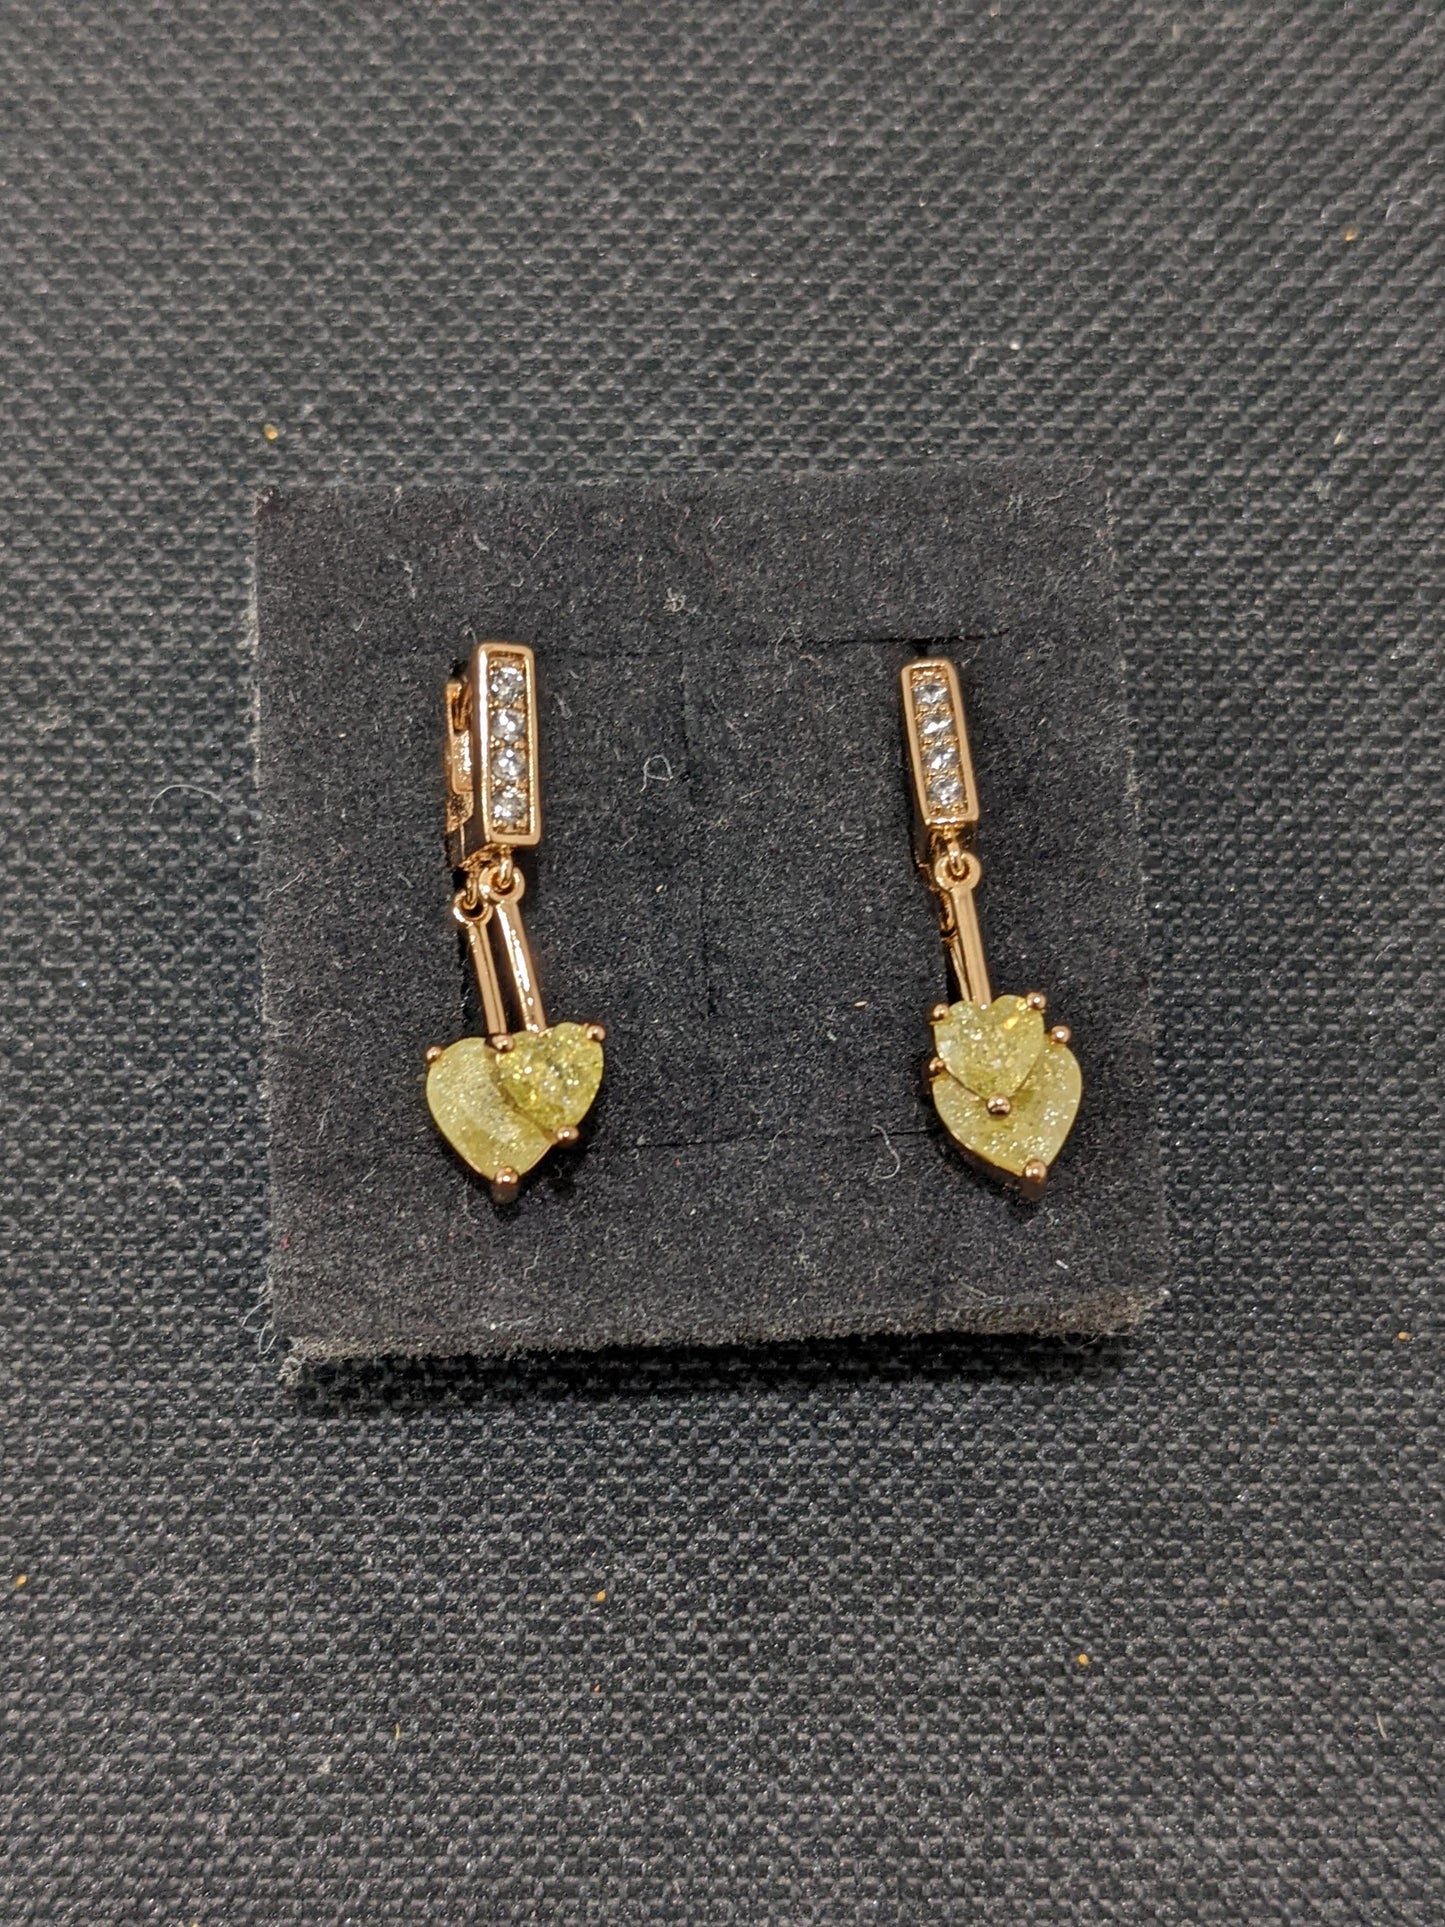 Dual heart dangle CZ stone ring style drop earrings